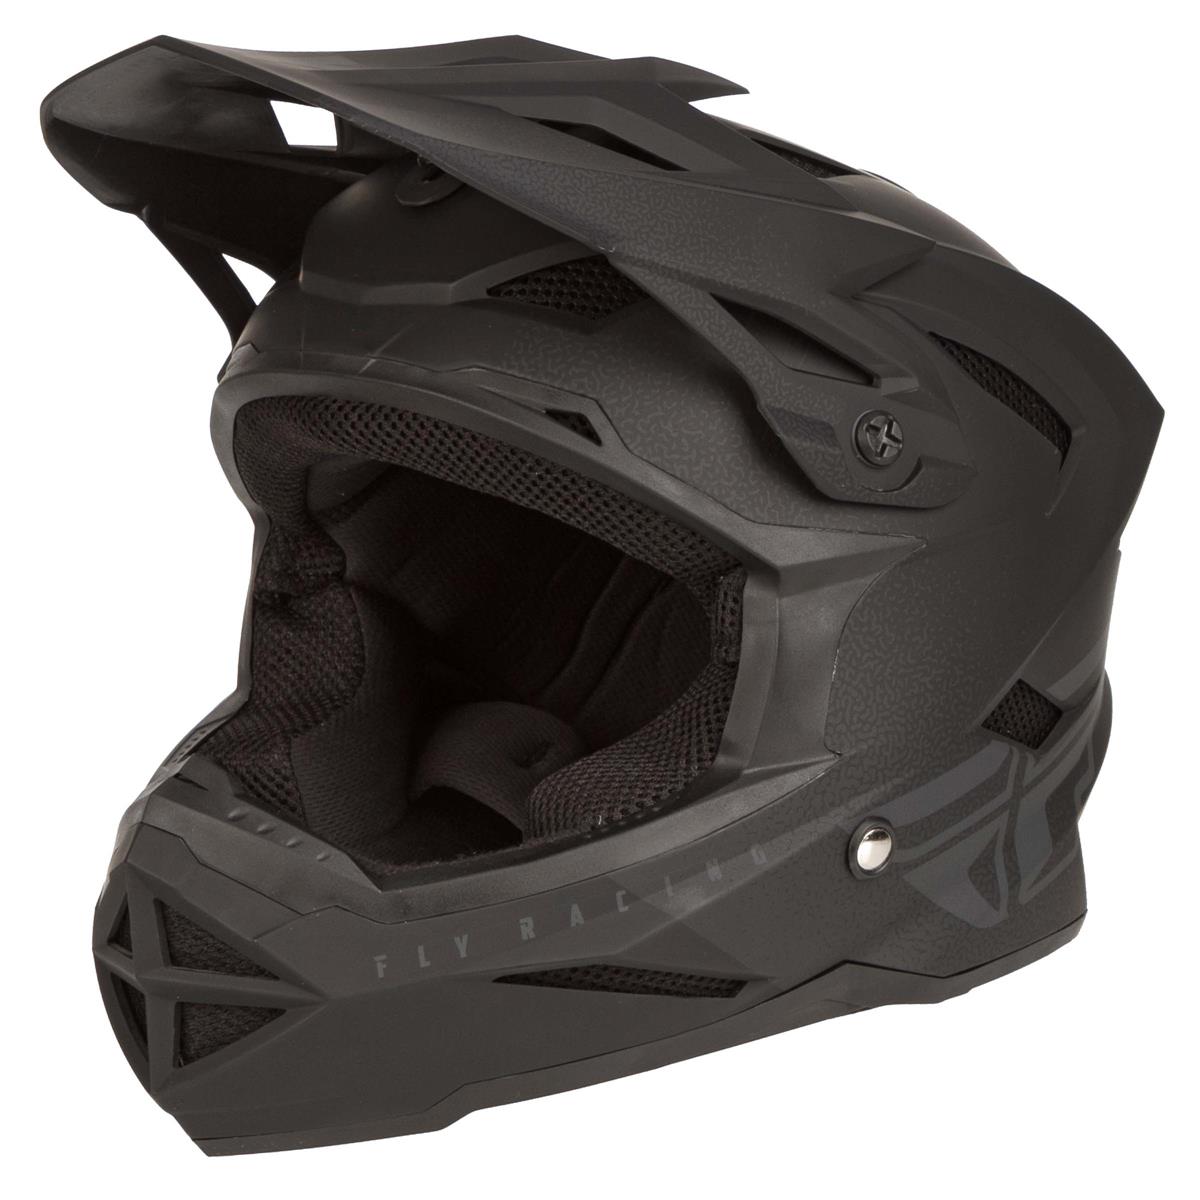 Details about   Fly Racing Default Full Face Helmet Matte White/Black 